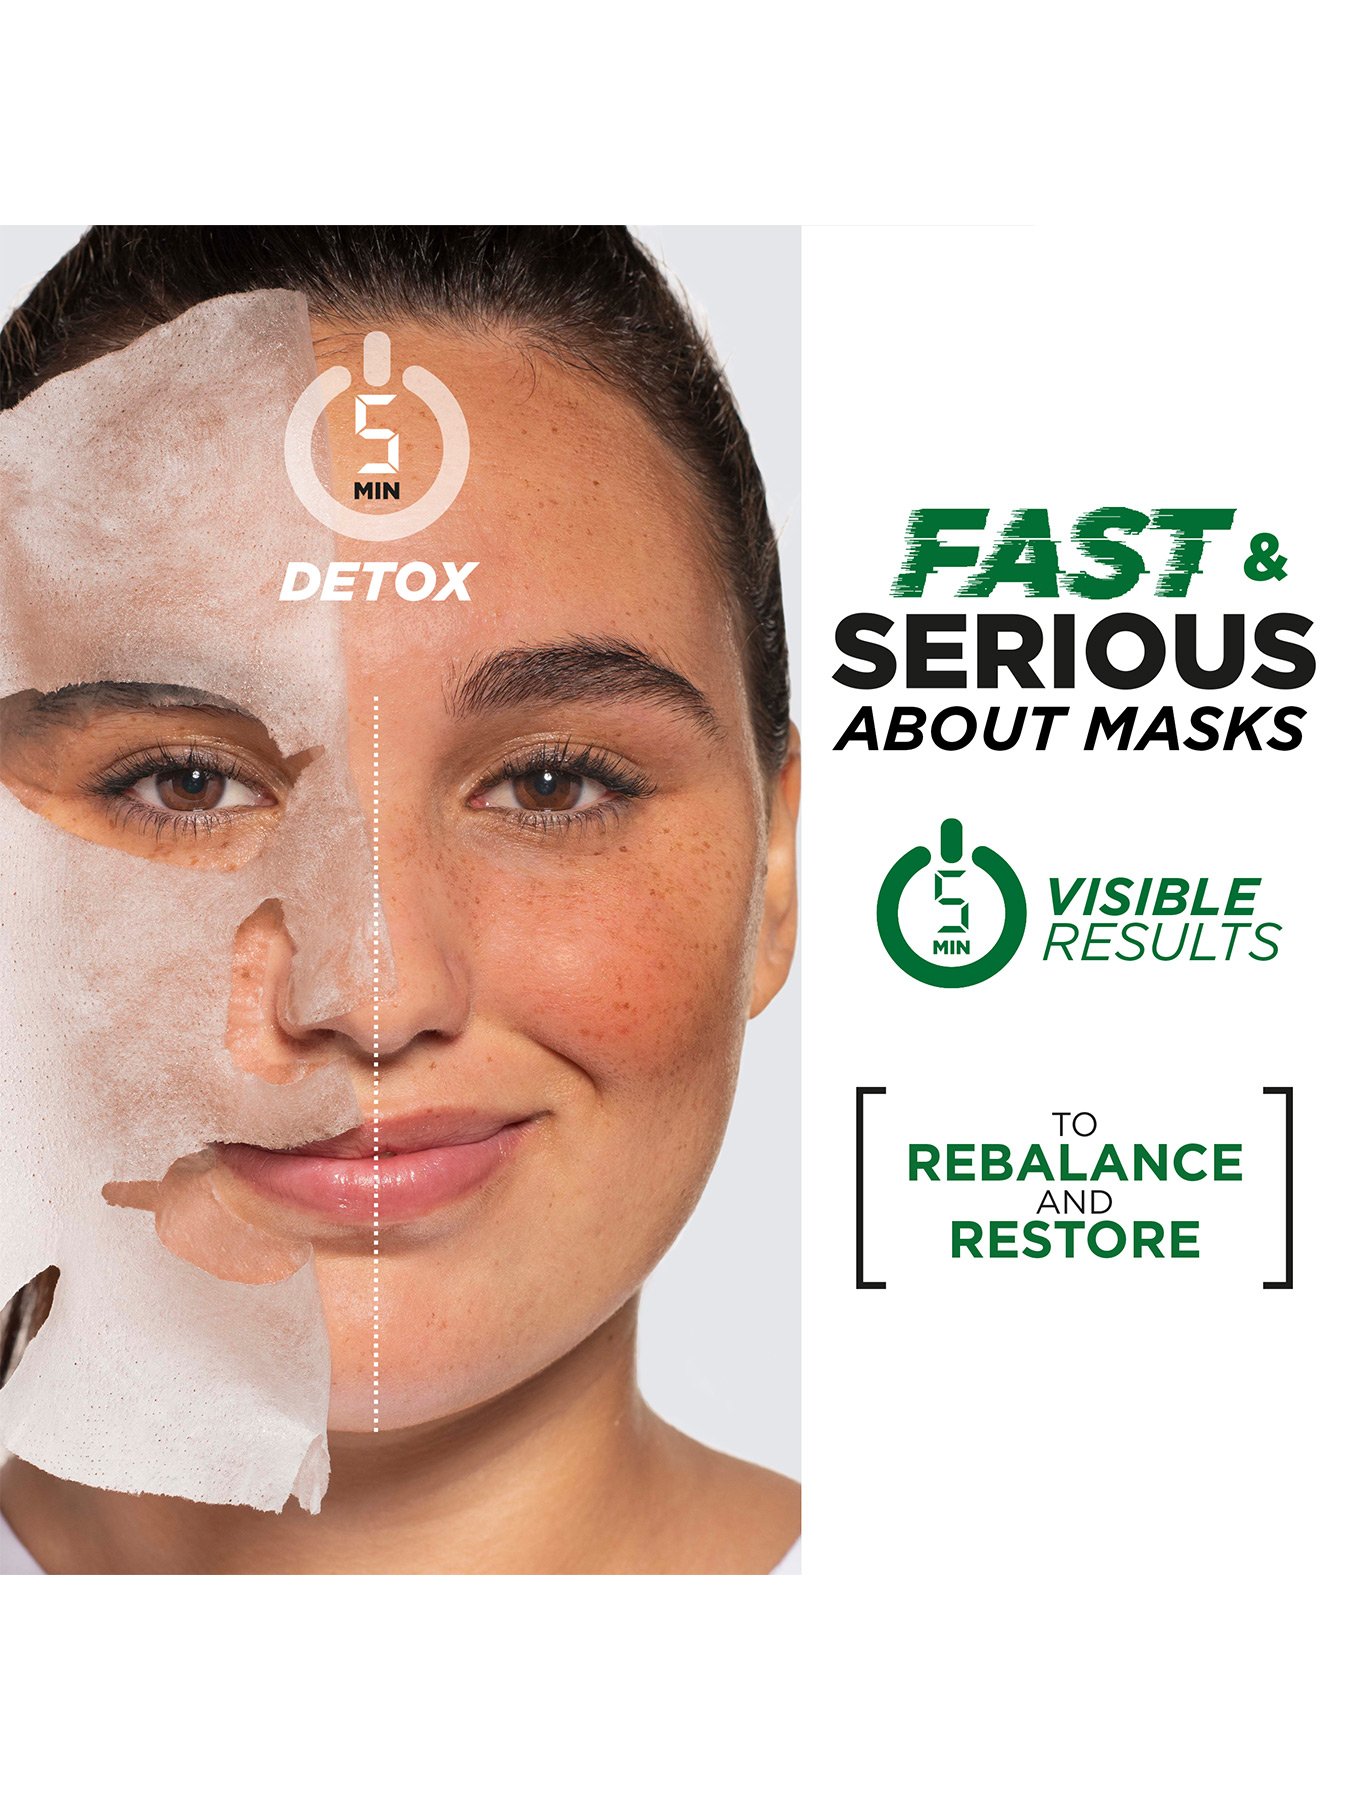 Garnier SkinActive Niacinamide Detox Ampoule Sheet Mask   Woman Using Mask